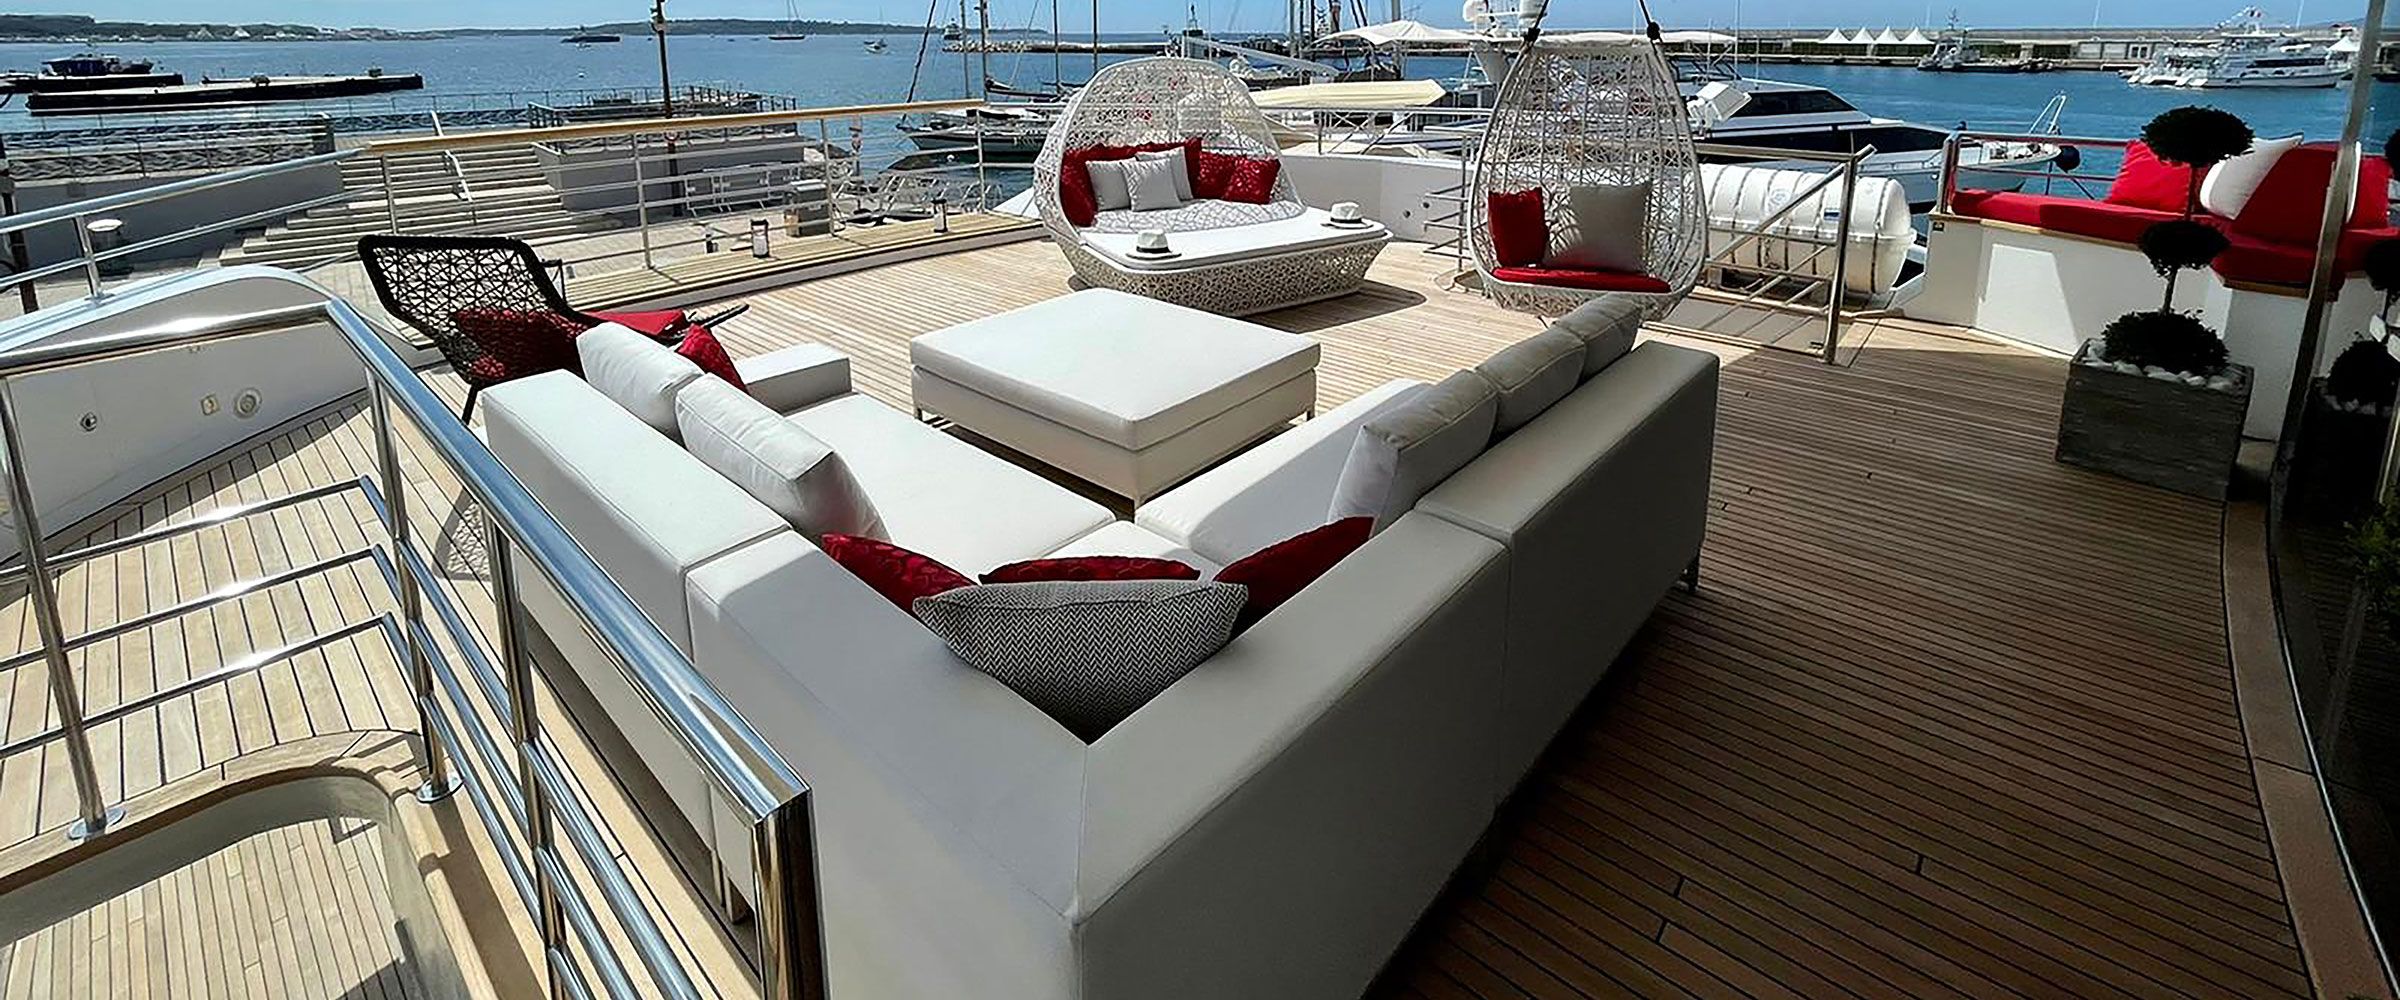 Nova Design – Marine upholstery, awnings and covers Croatia Zadar | Sun awnings and wall covering for boats Croatia Zadar